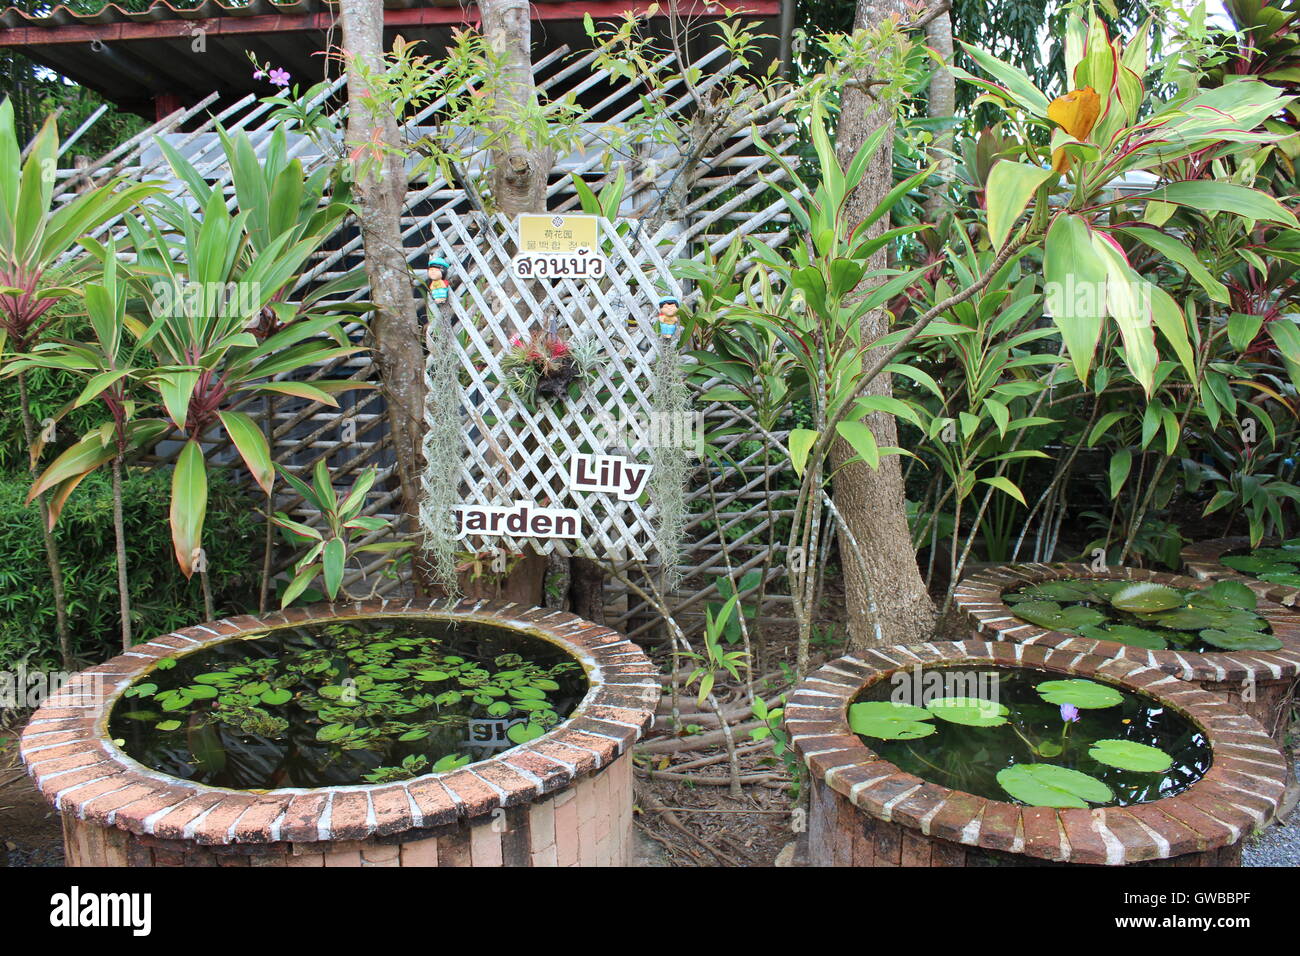 Water lily garden, Phuket Botanic, Thailand Stock Photo